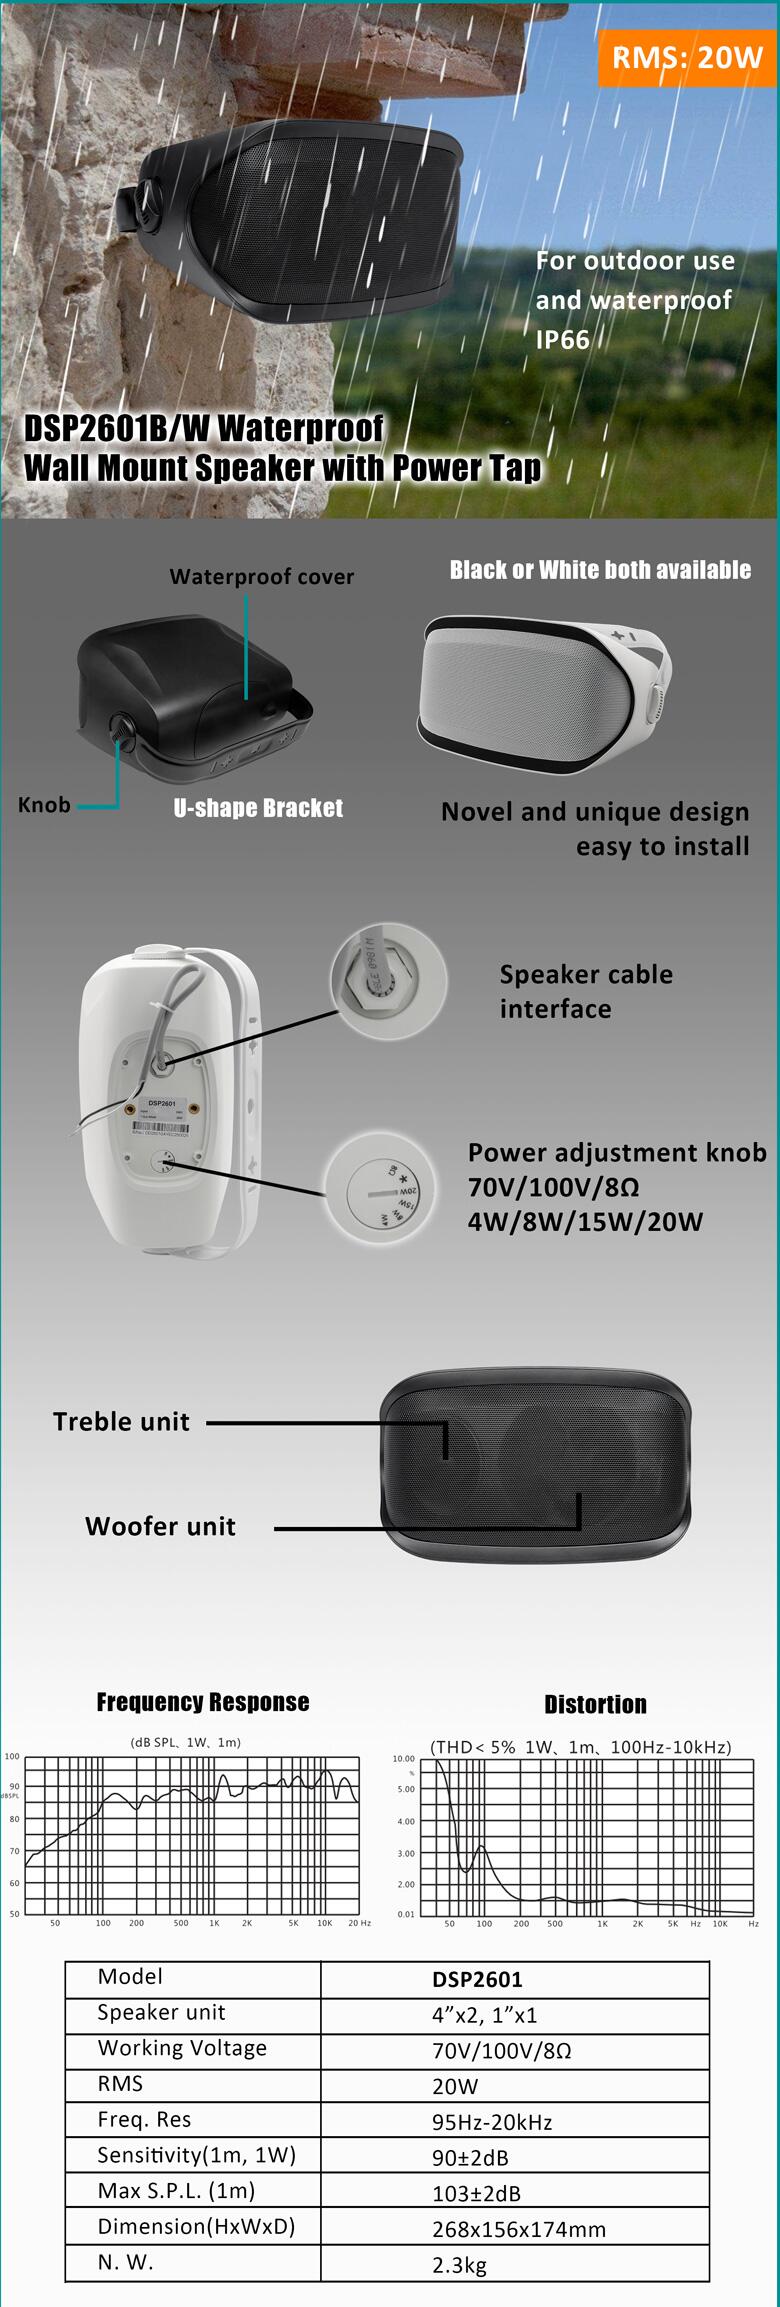 dsp2601-brochure---new-arrivals-of-multi-pa-wall-mounted-speaker.jpg